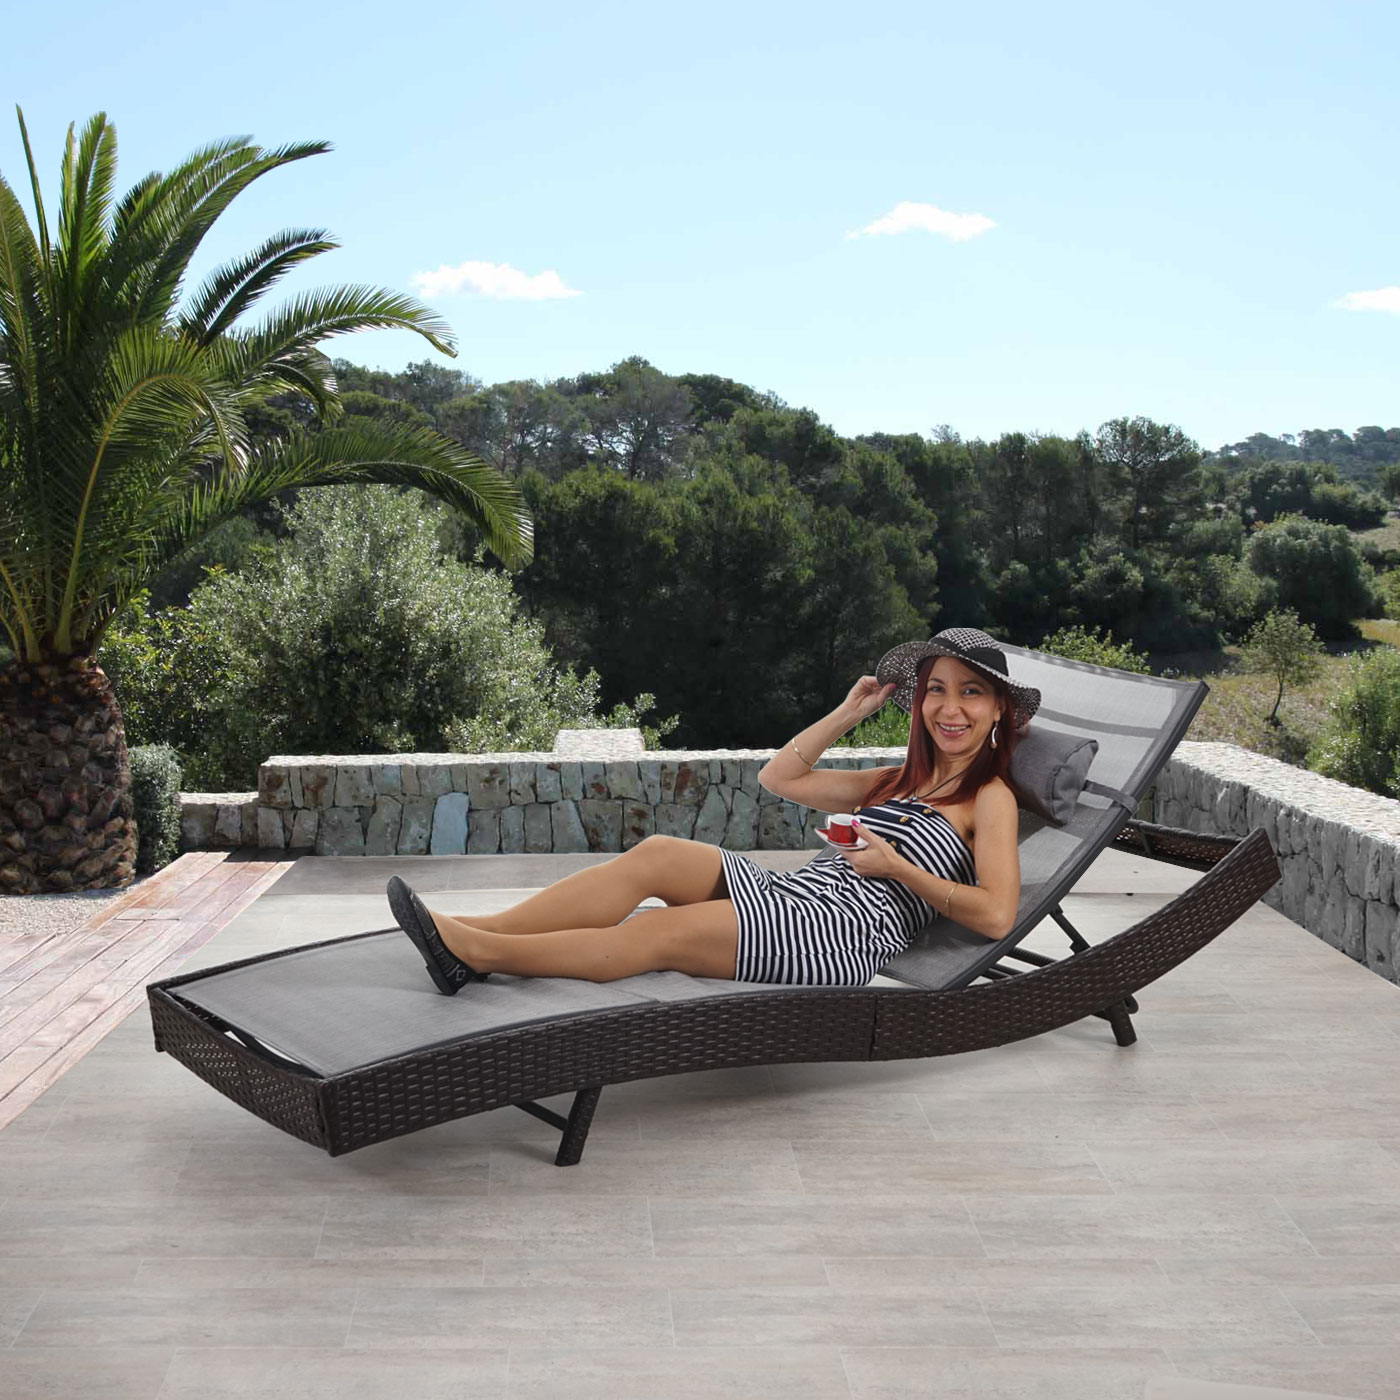 Sonnenliege Savannah, Relaxliege Gartenliege Liege, Poly-Rattan -  braun-meliert, Bezug grau | Swisshandel24